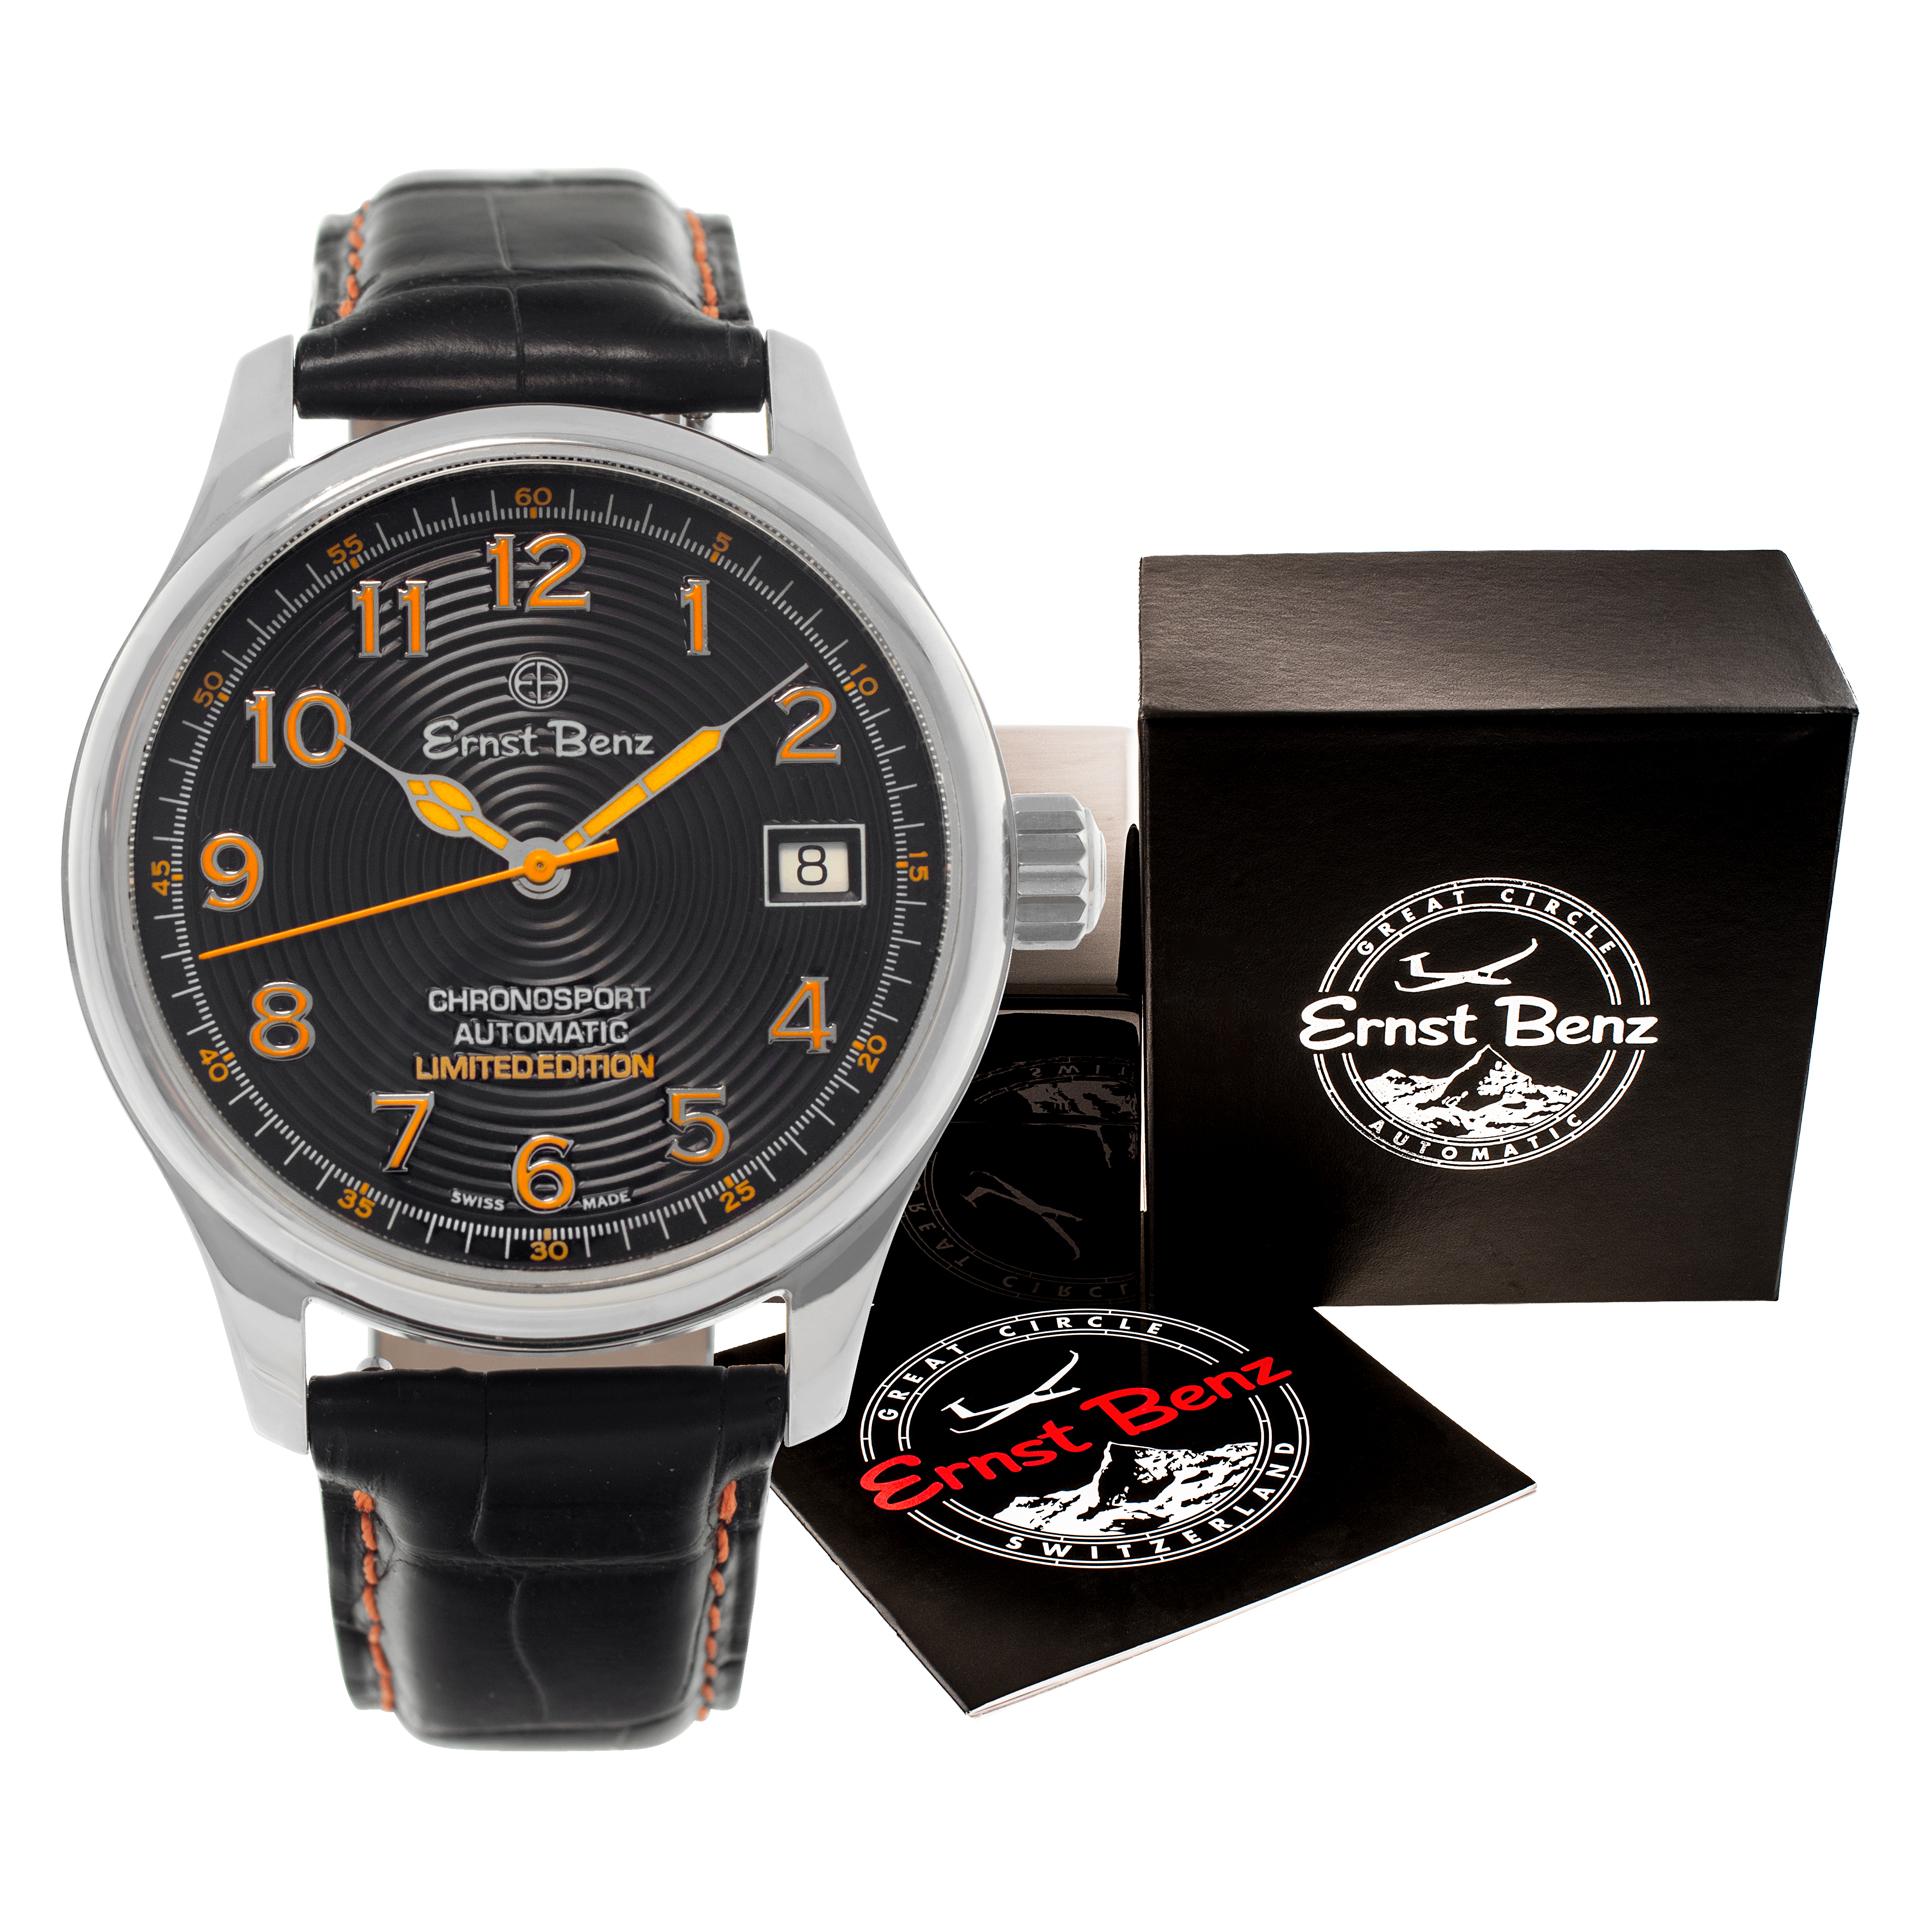 Unused Ernst Benz Chronosport stainless steel Automatic Wristwatch Ref GC30286 For Sale 2